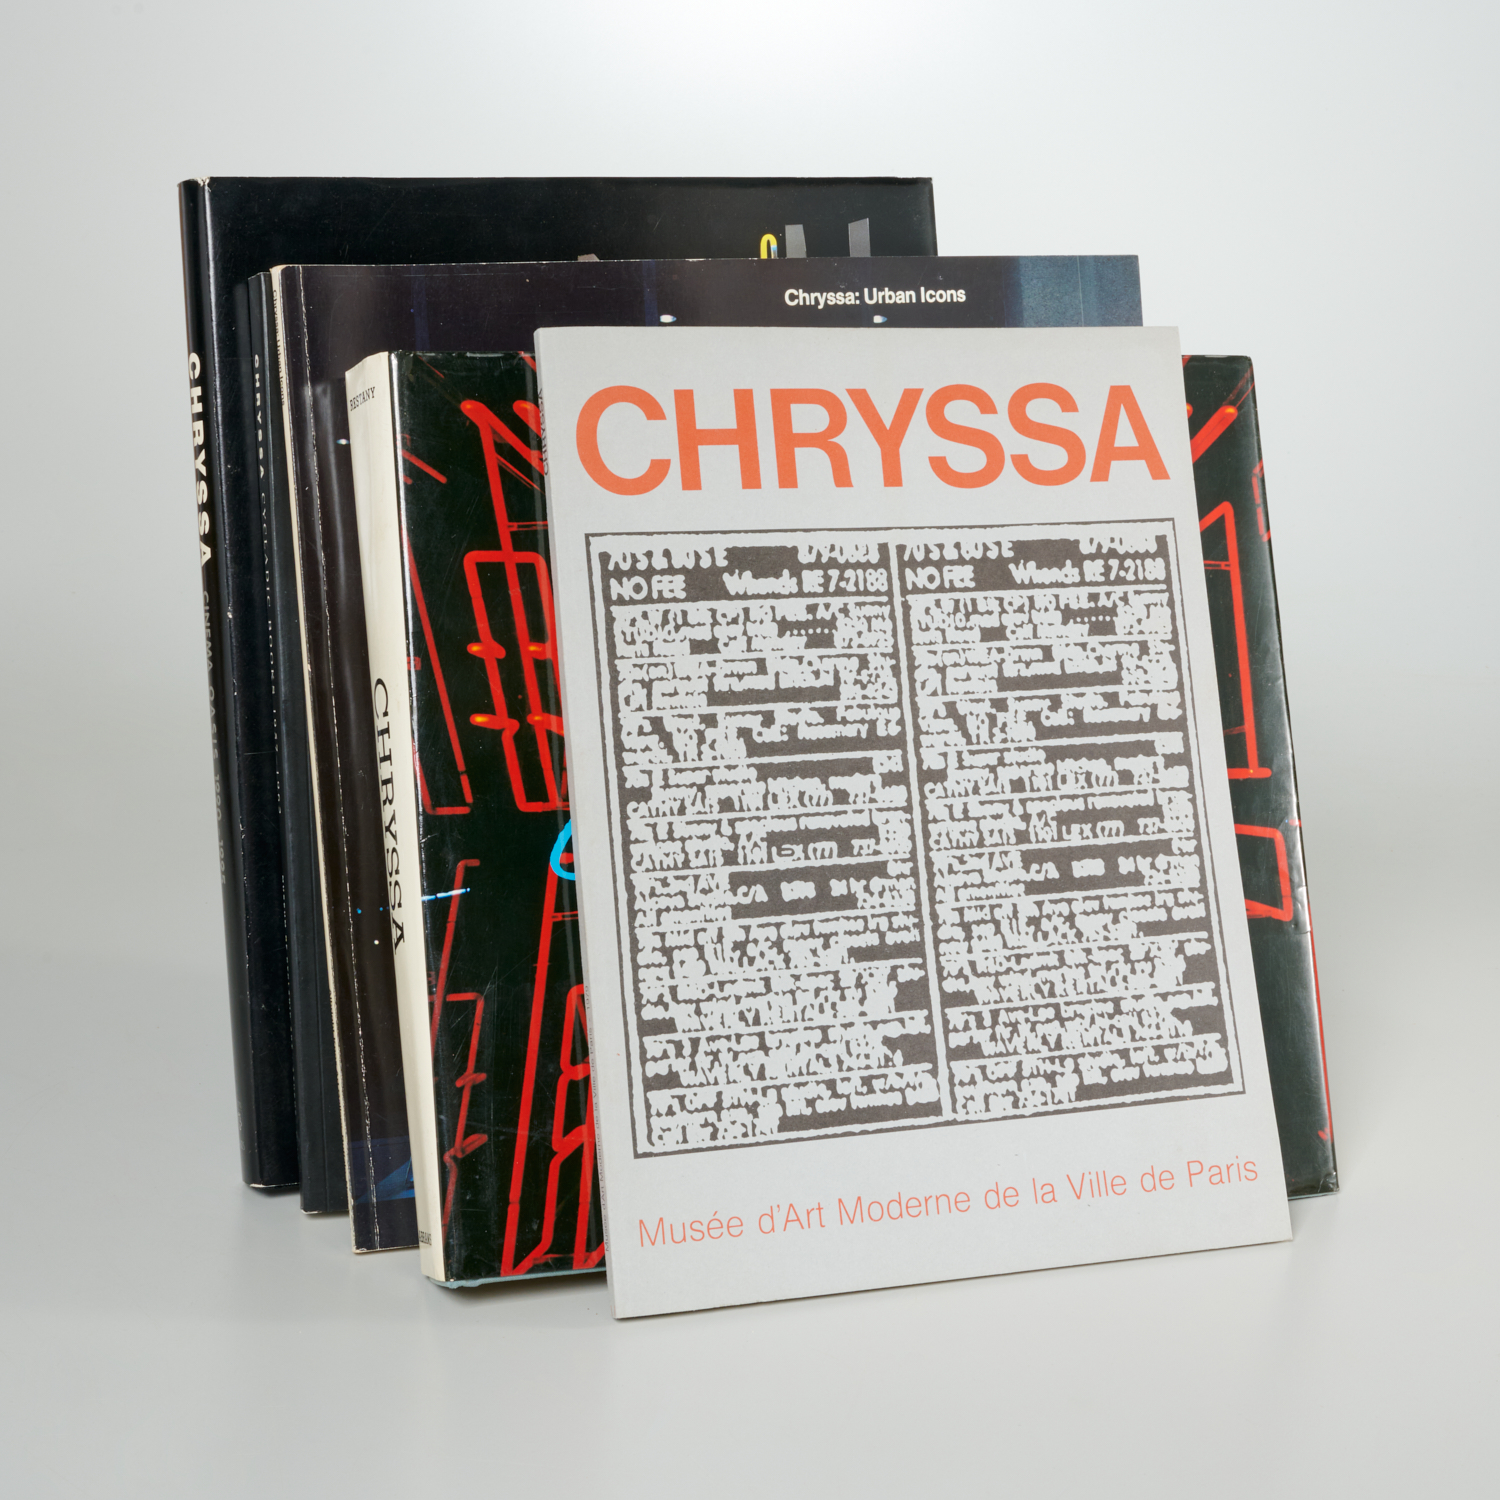 CHRYSSA 5 BOOKS EXHIBITION 361a30